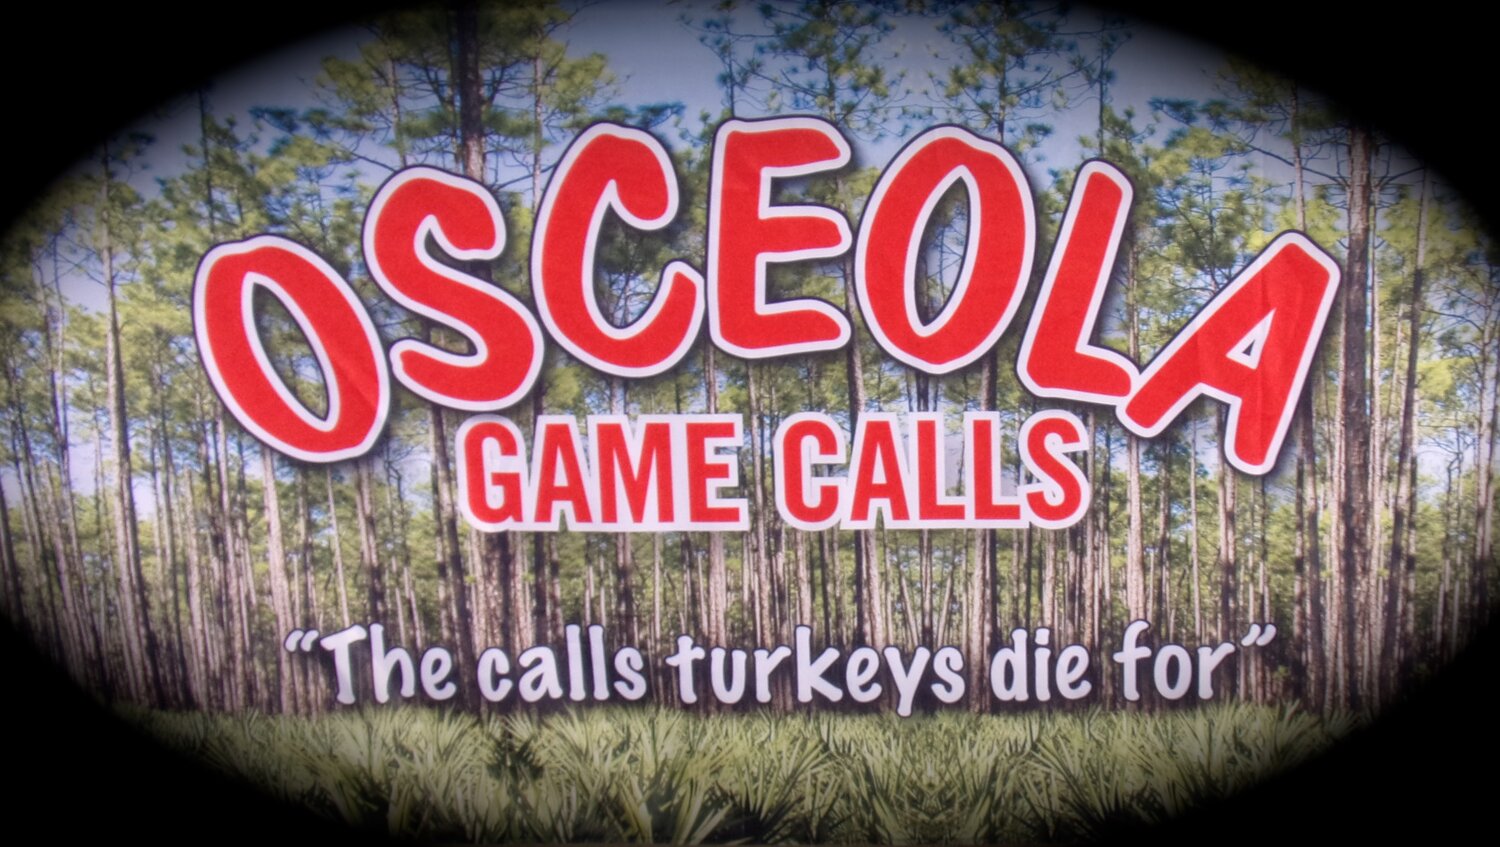 Osceola Game Calls